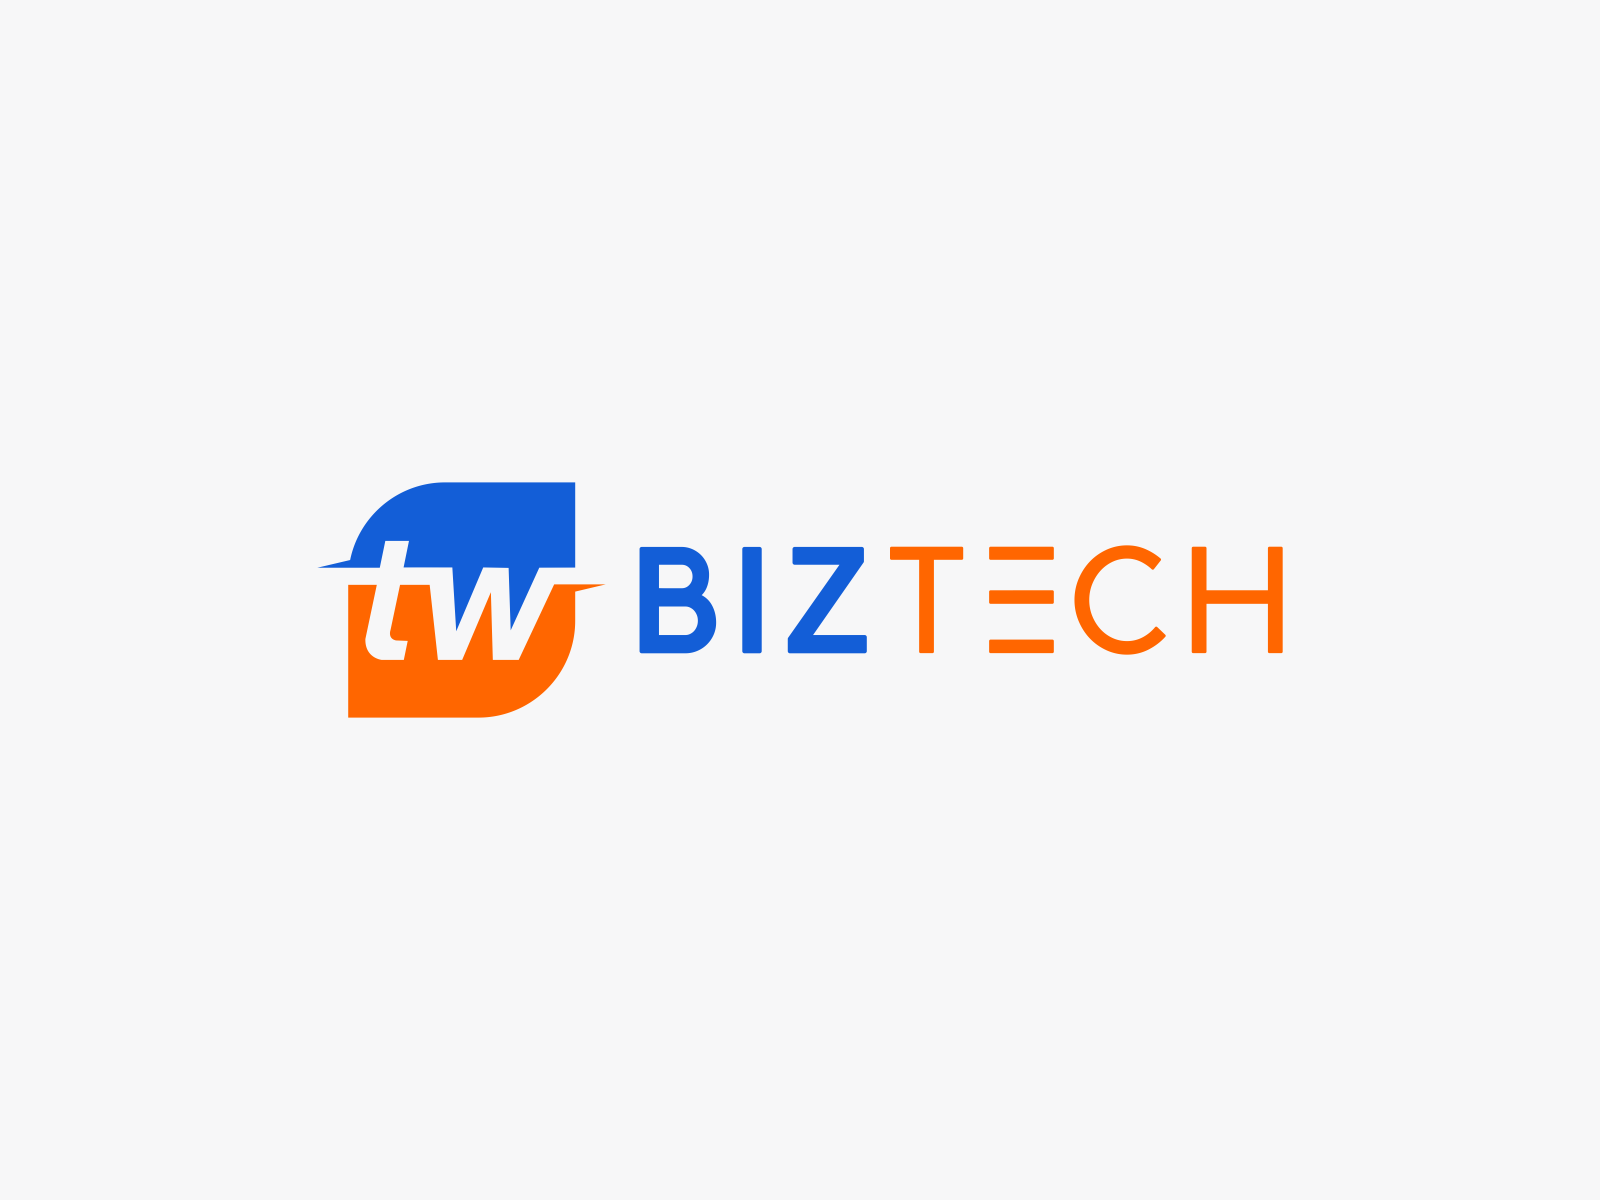 biztech by emmizenzo on Dribbble